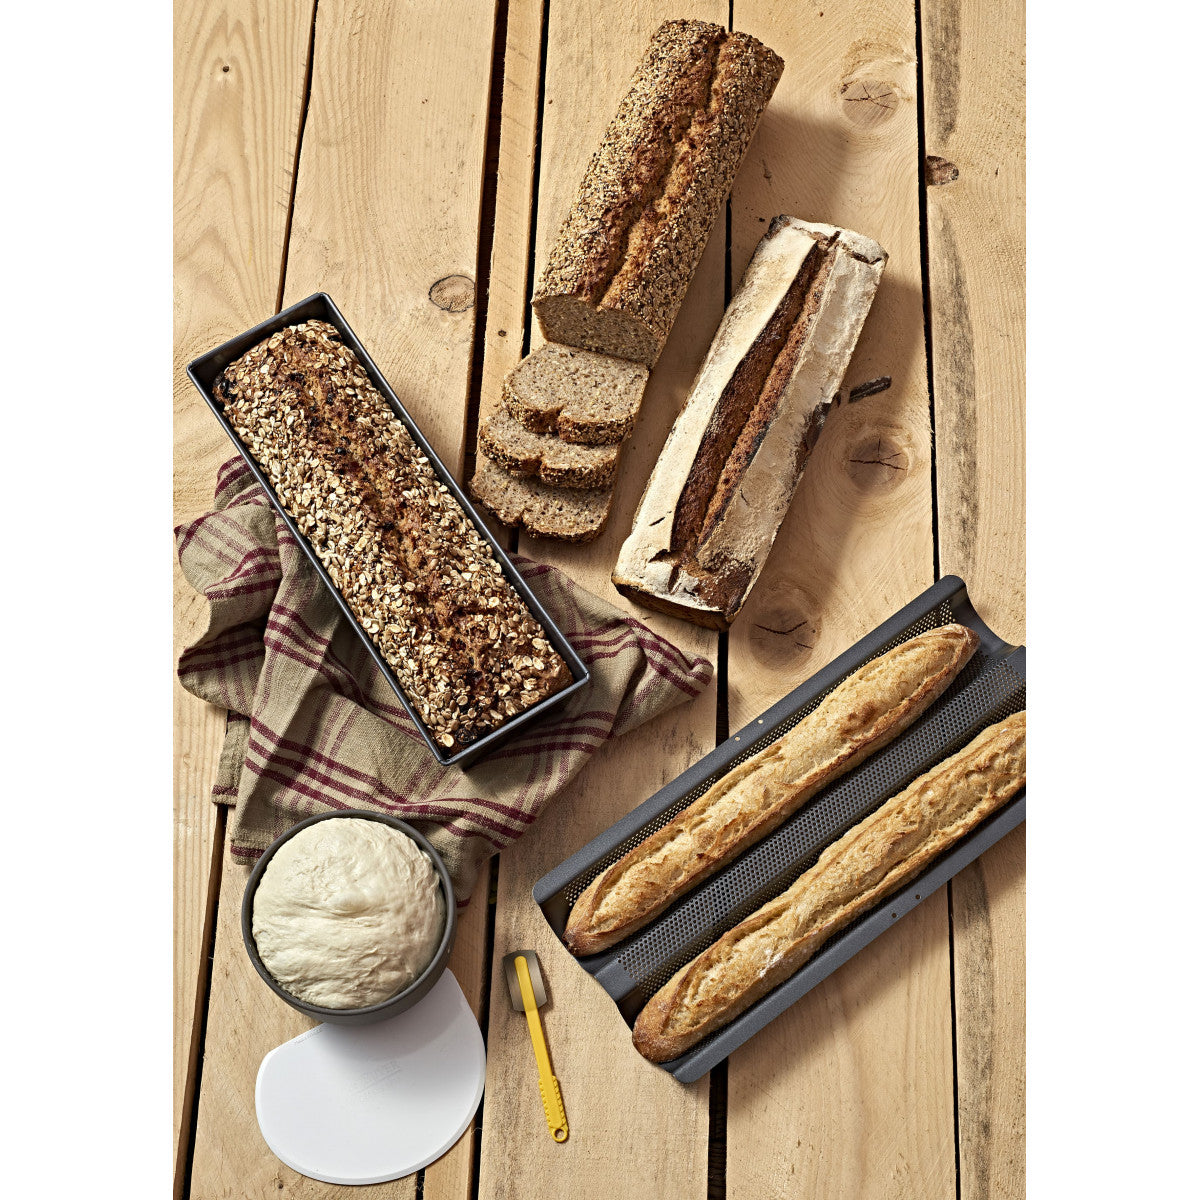 de Buyer Homemade Bread Box